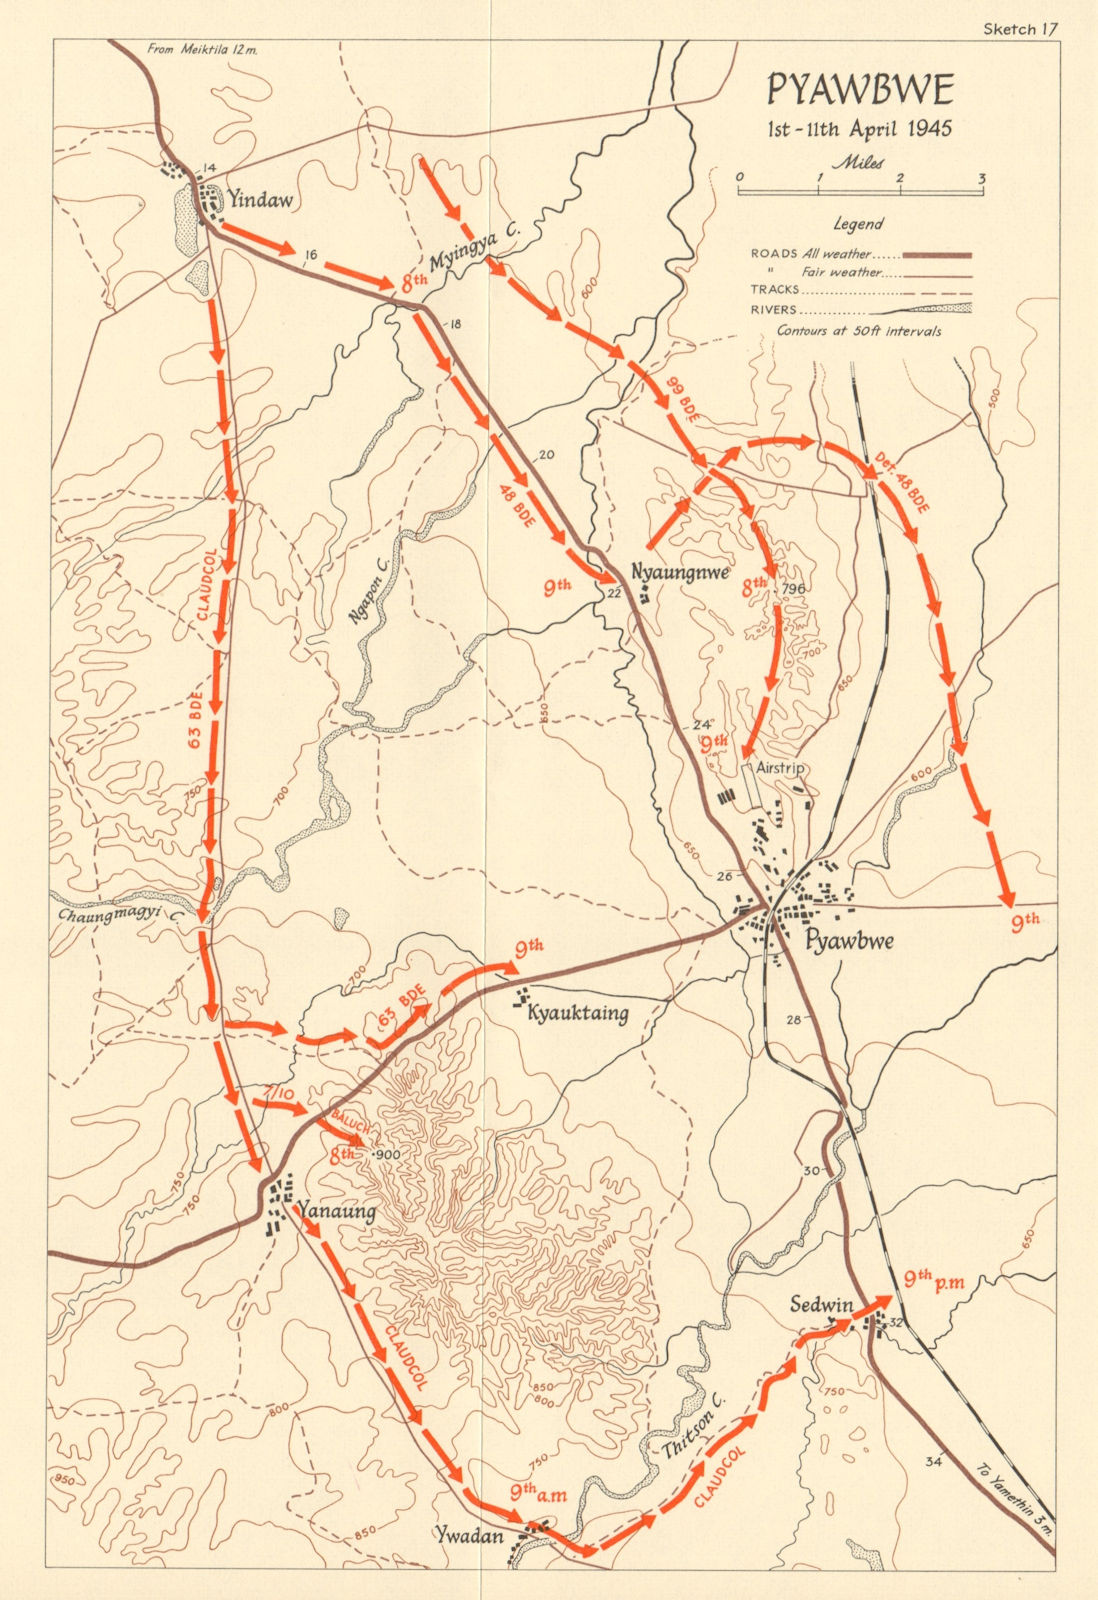 Associate Product Attack on Pyawbwe 1-11 April 1945. Burma Campaign. World War 2 1965 old map